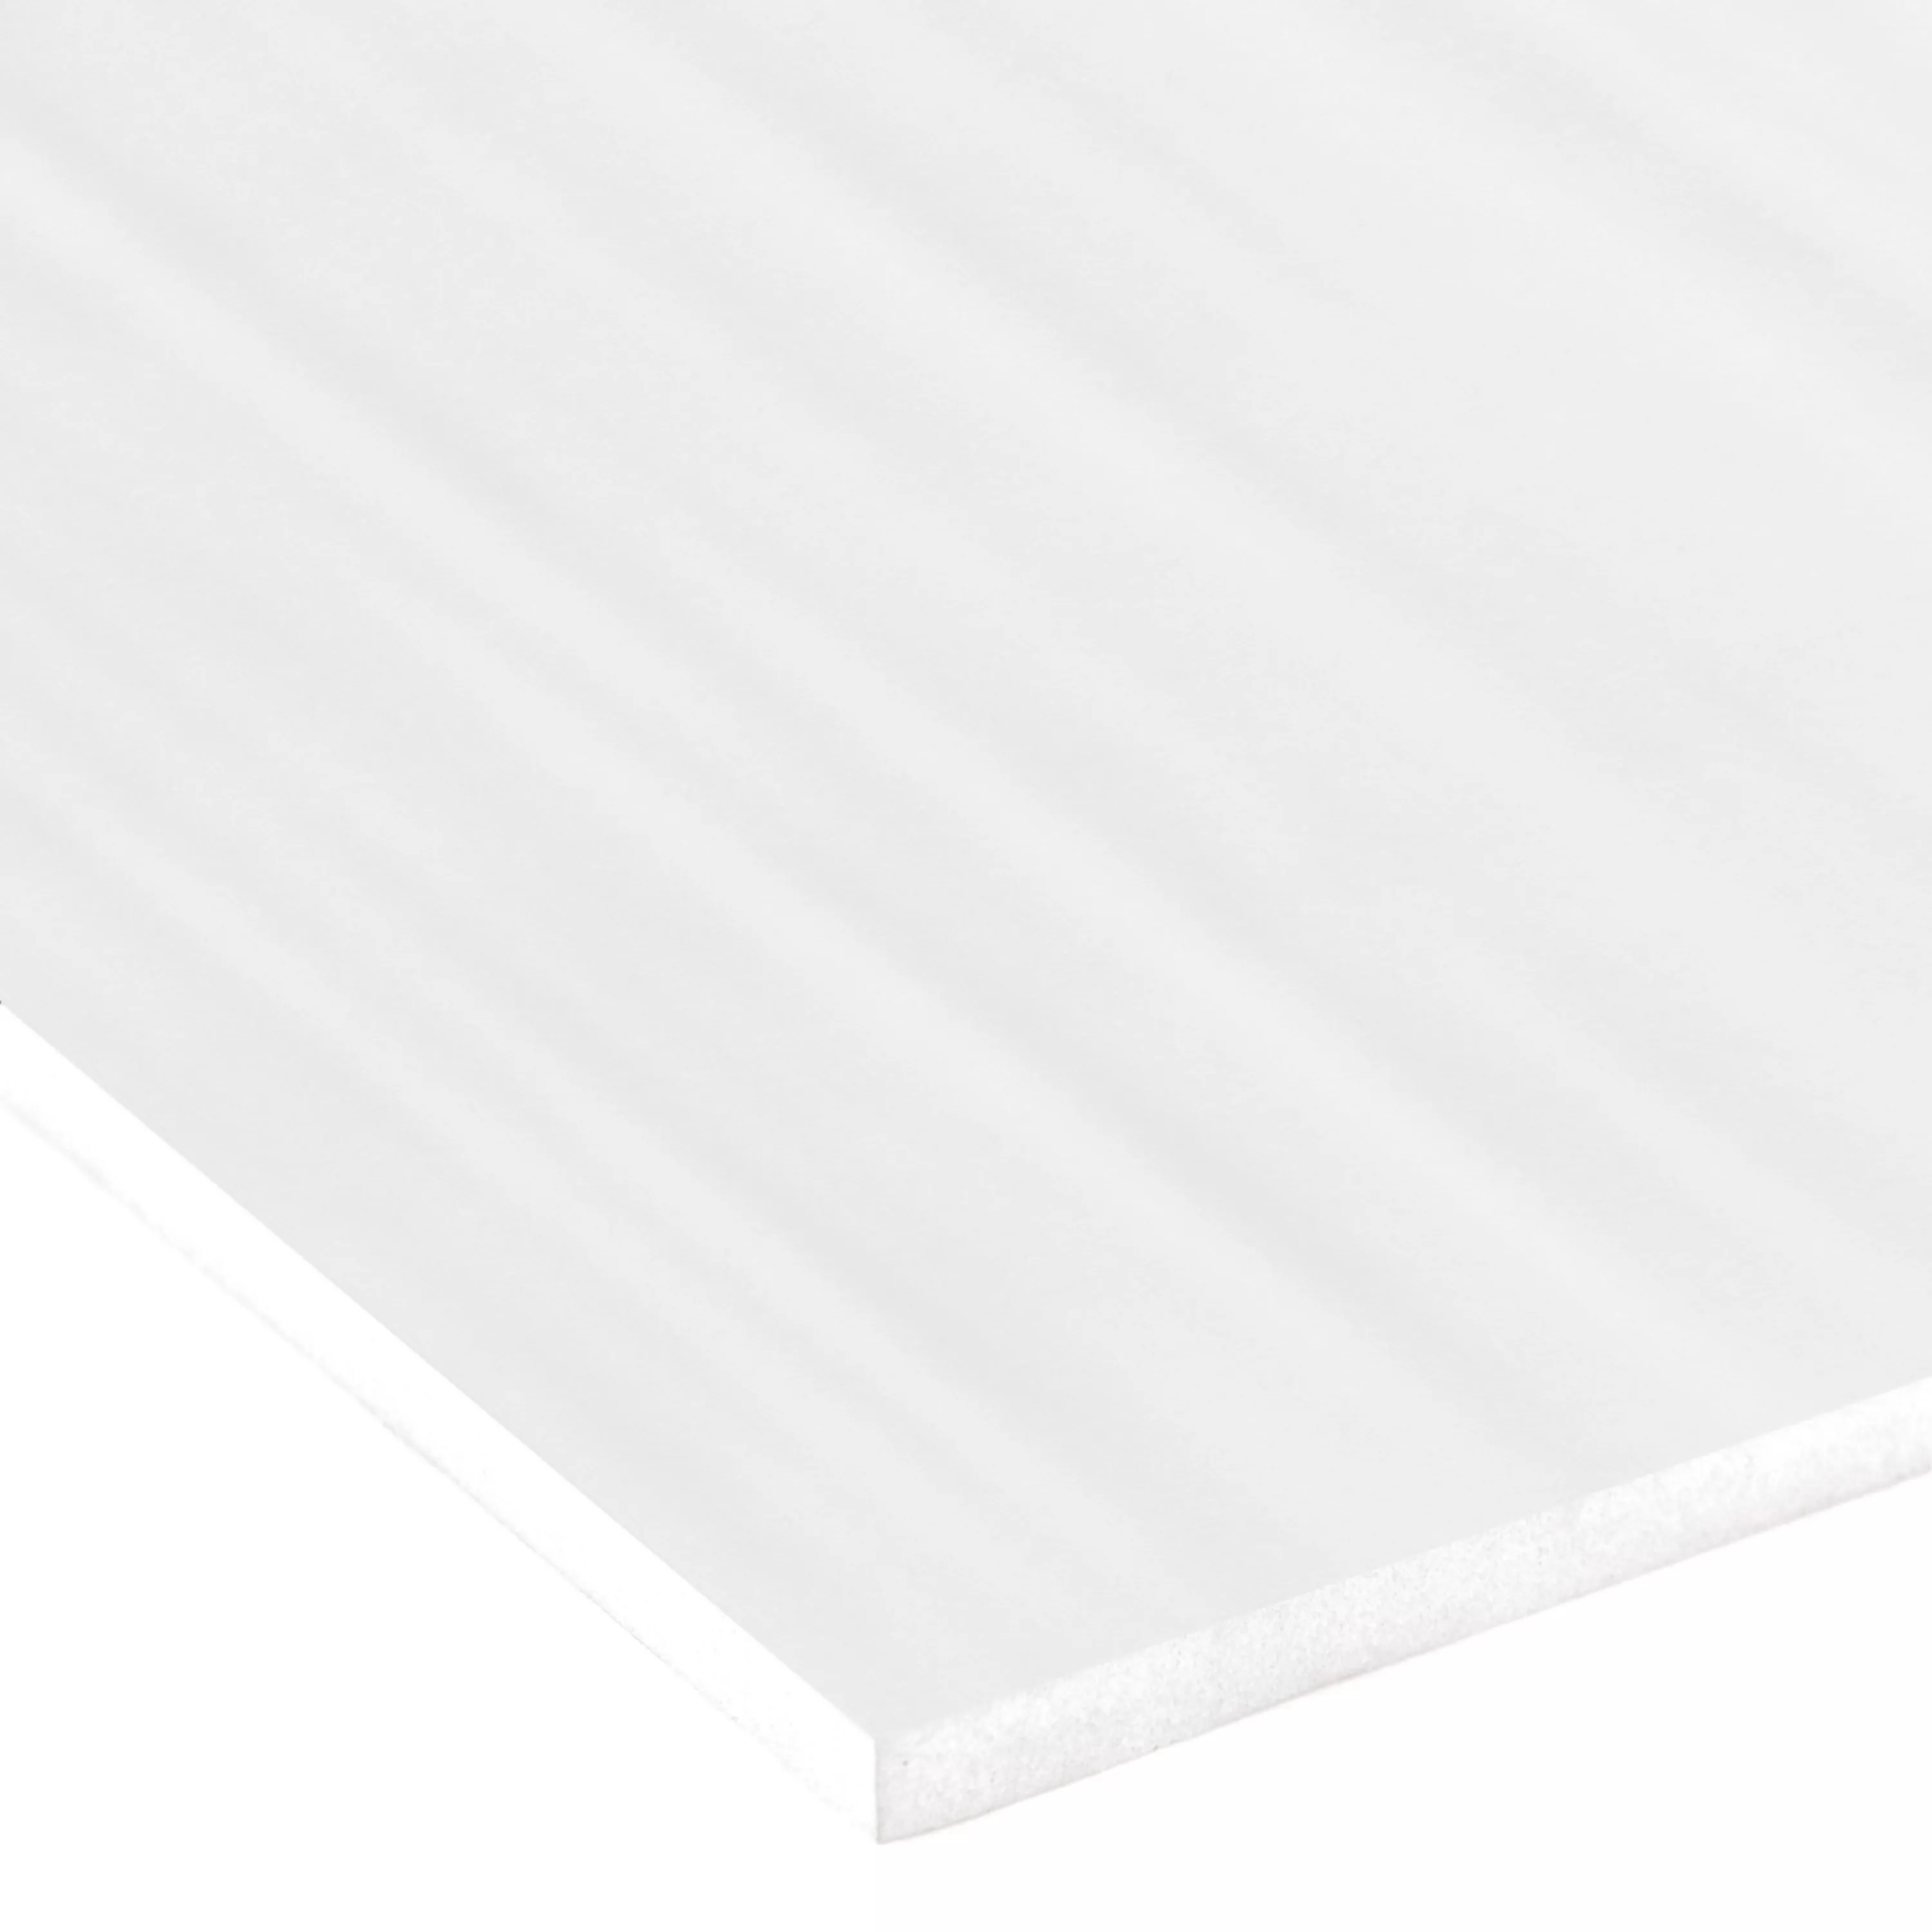 Sample Wall Tiles Richard Wave 30x60cm White Glossy